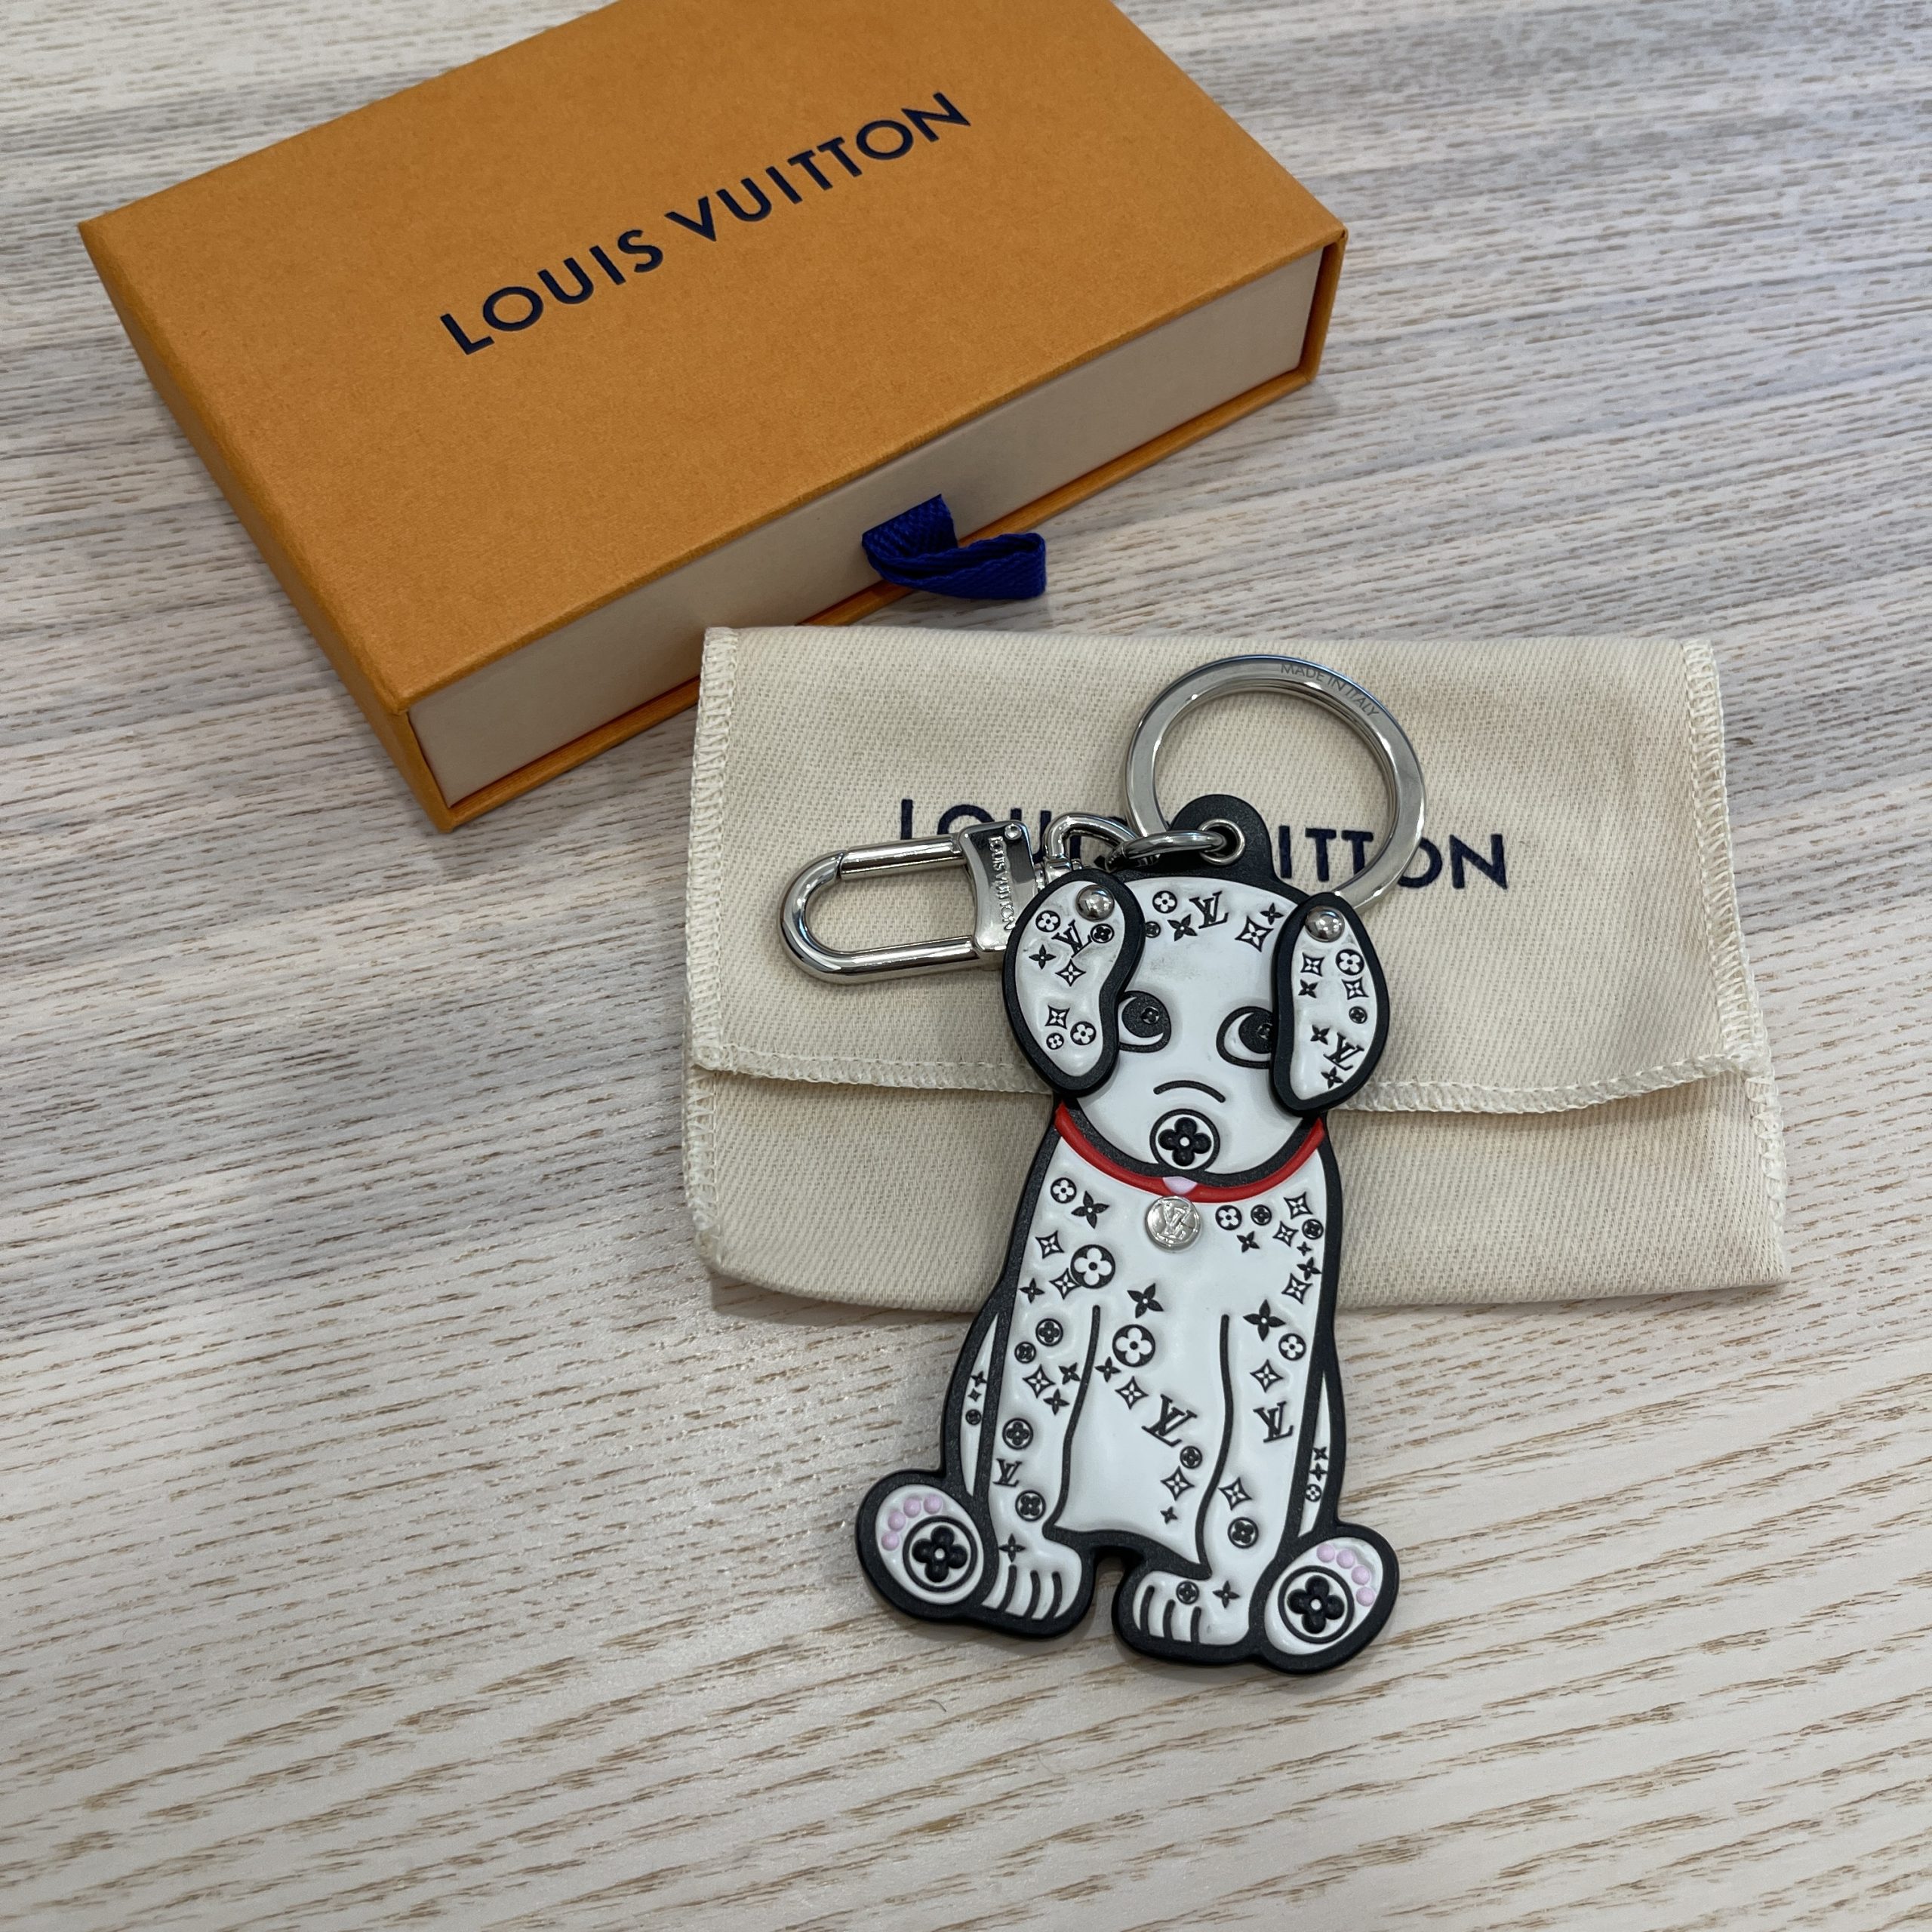 Louis Vuitton LV Dog Key Holder And Bag Charm w/ Tags - White Bag